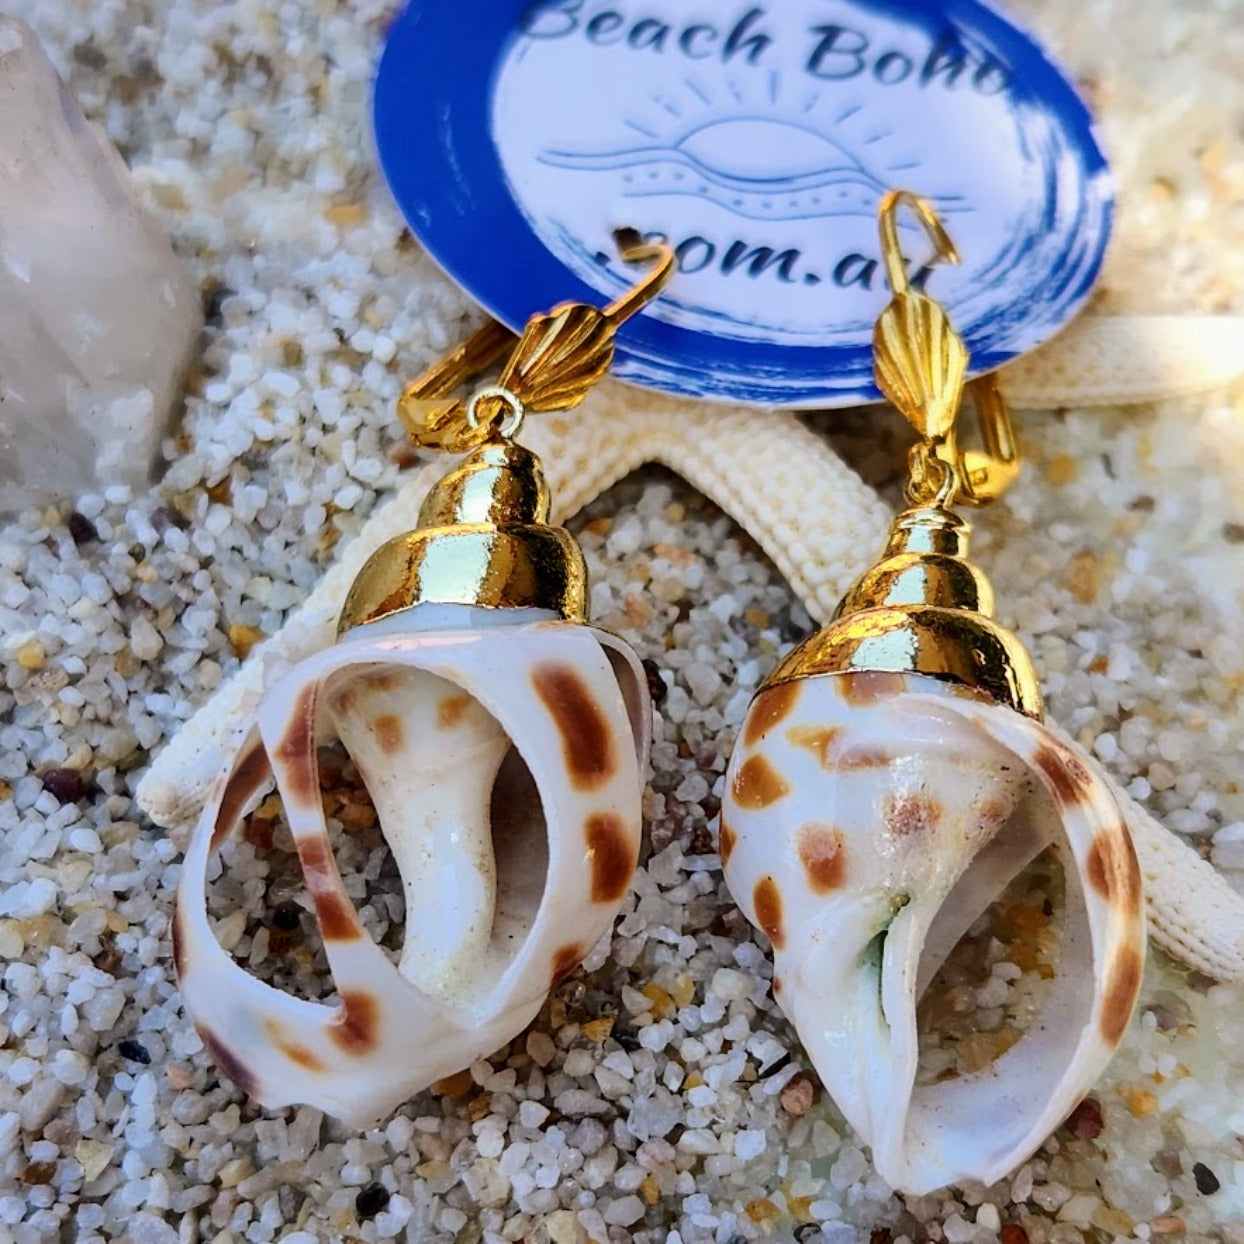 SPECKLED SHELLS - GOLD HOOK BOHO EARRINGS - Premium earrings from www.beachboho.com.au - Just $35! Shop now at www.beachboho.com.au